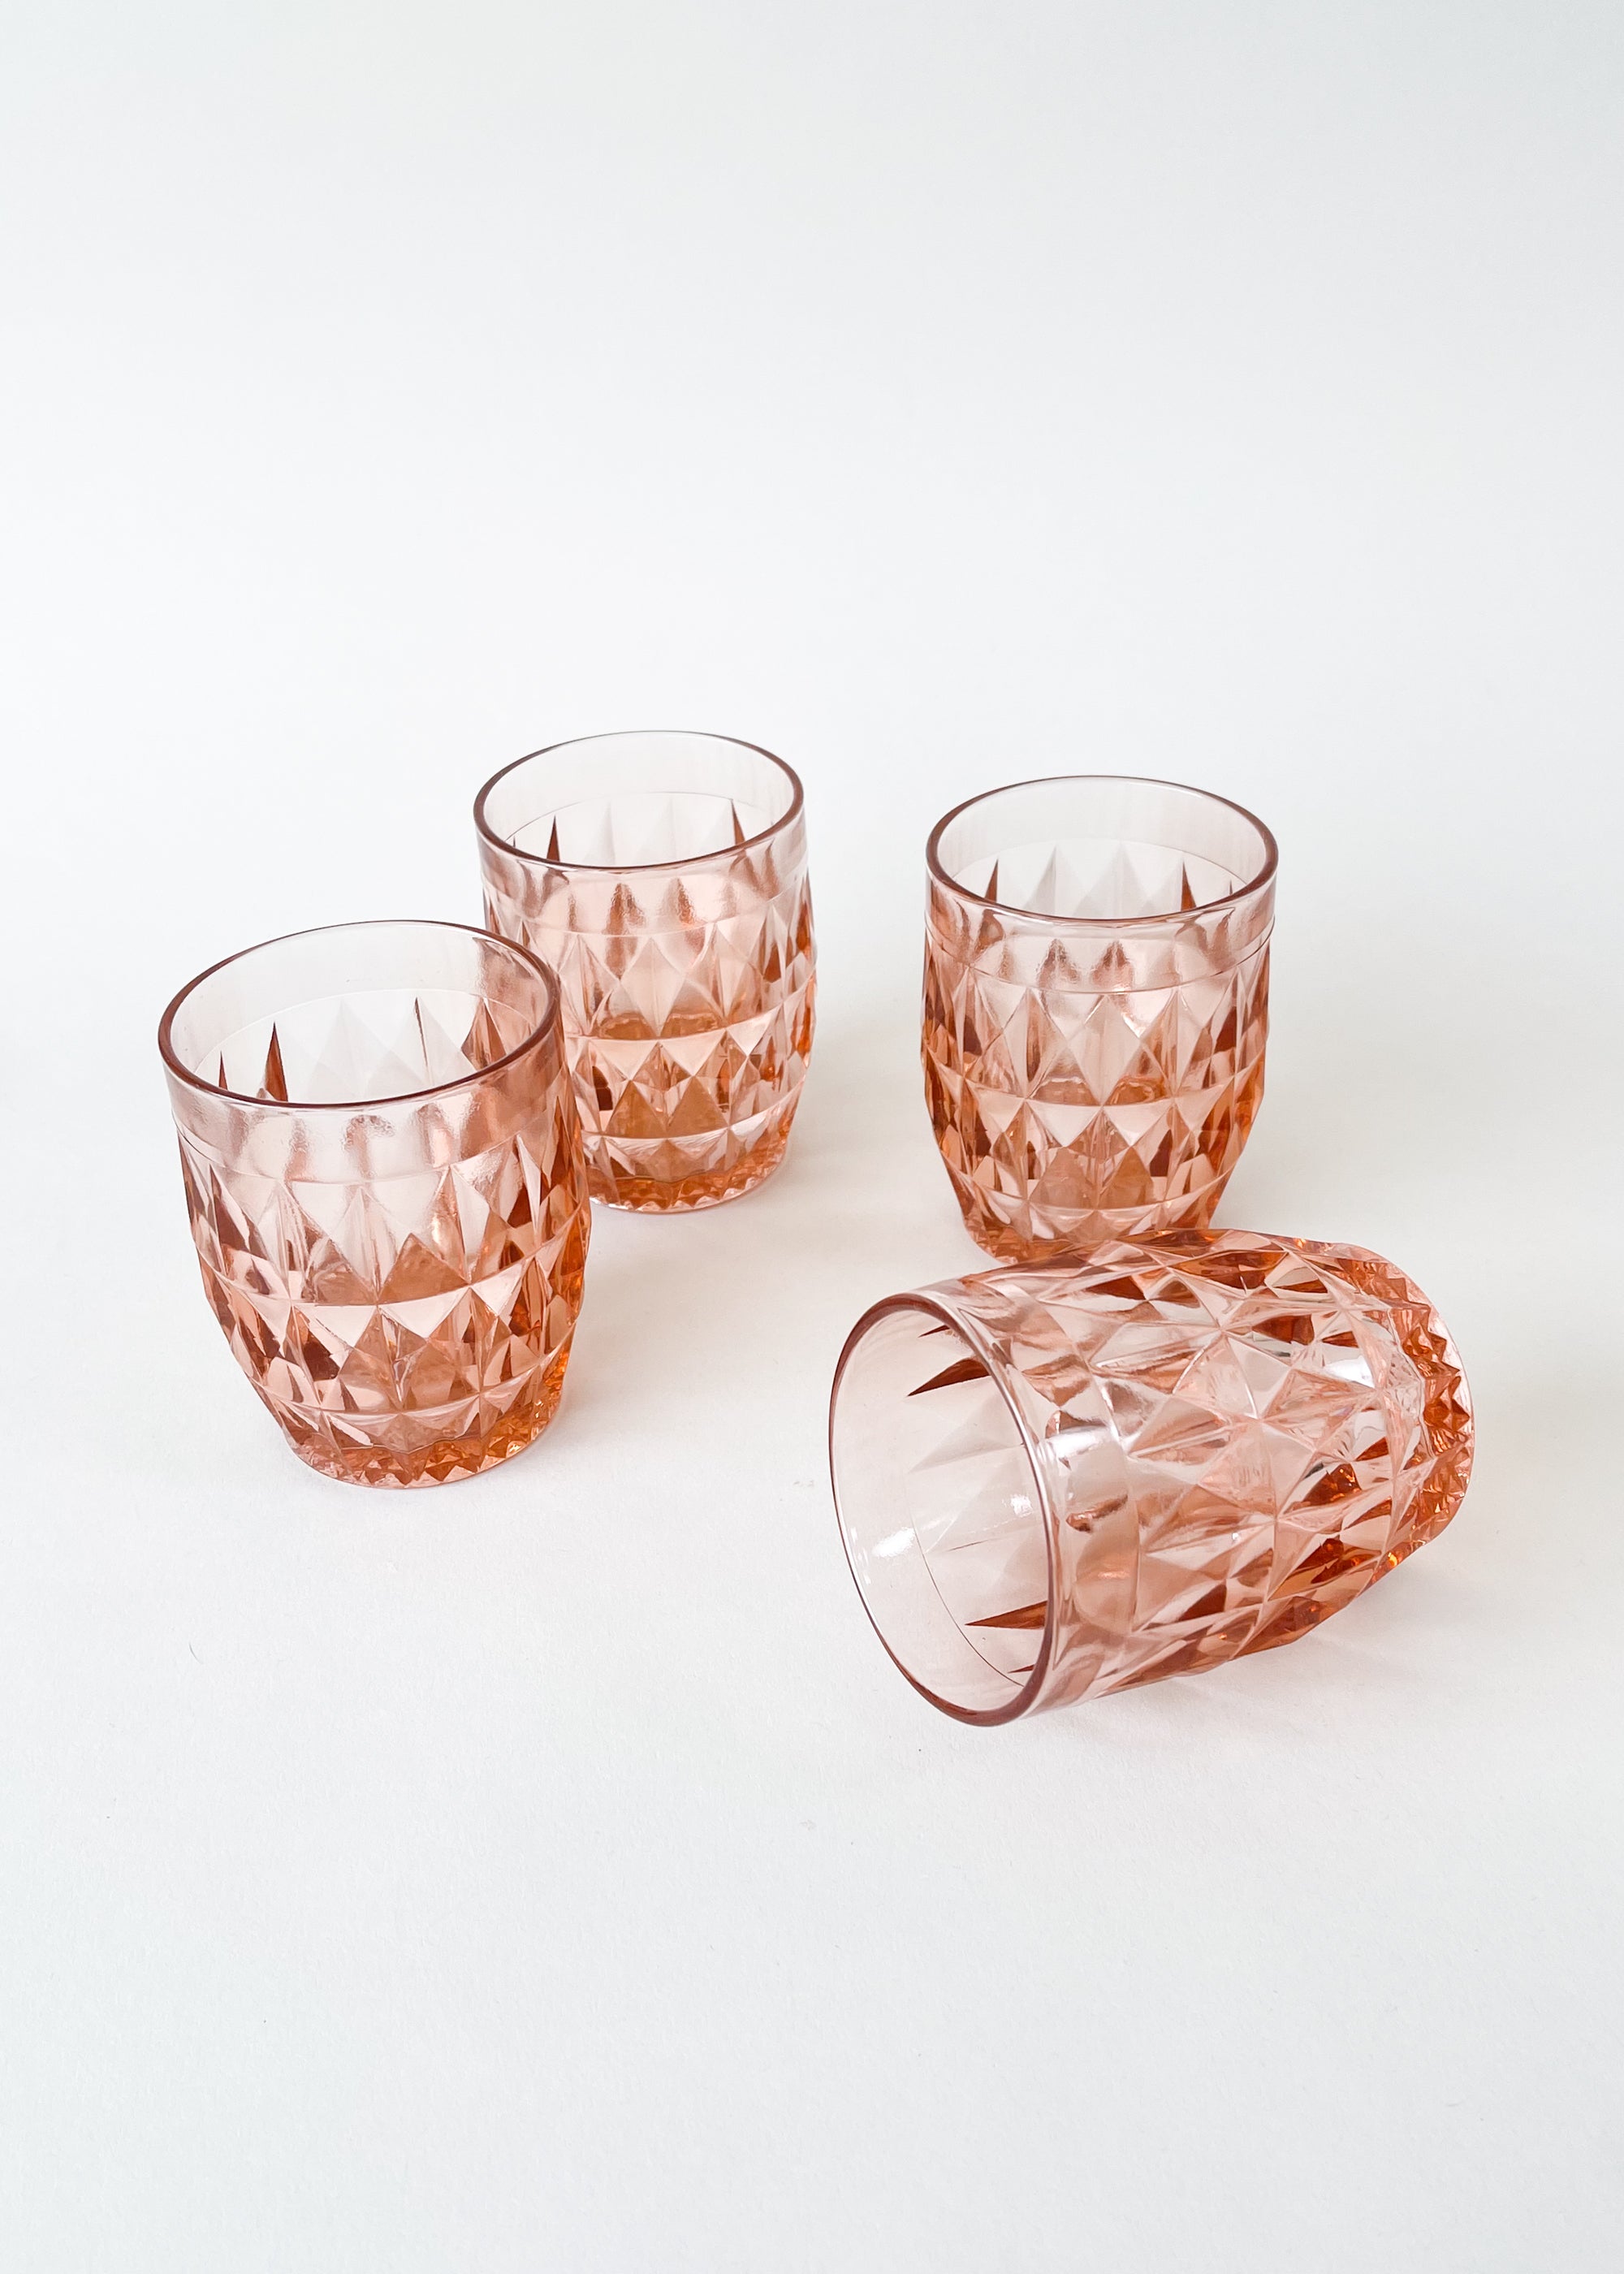 Symphony swirl optic pattern drinking glasses set of 8, vintage Wheaton  rose pink glass tumblers